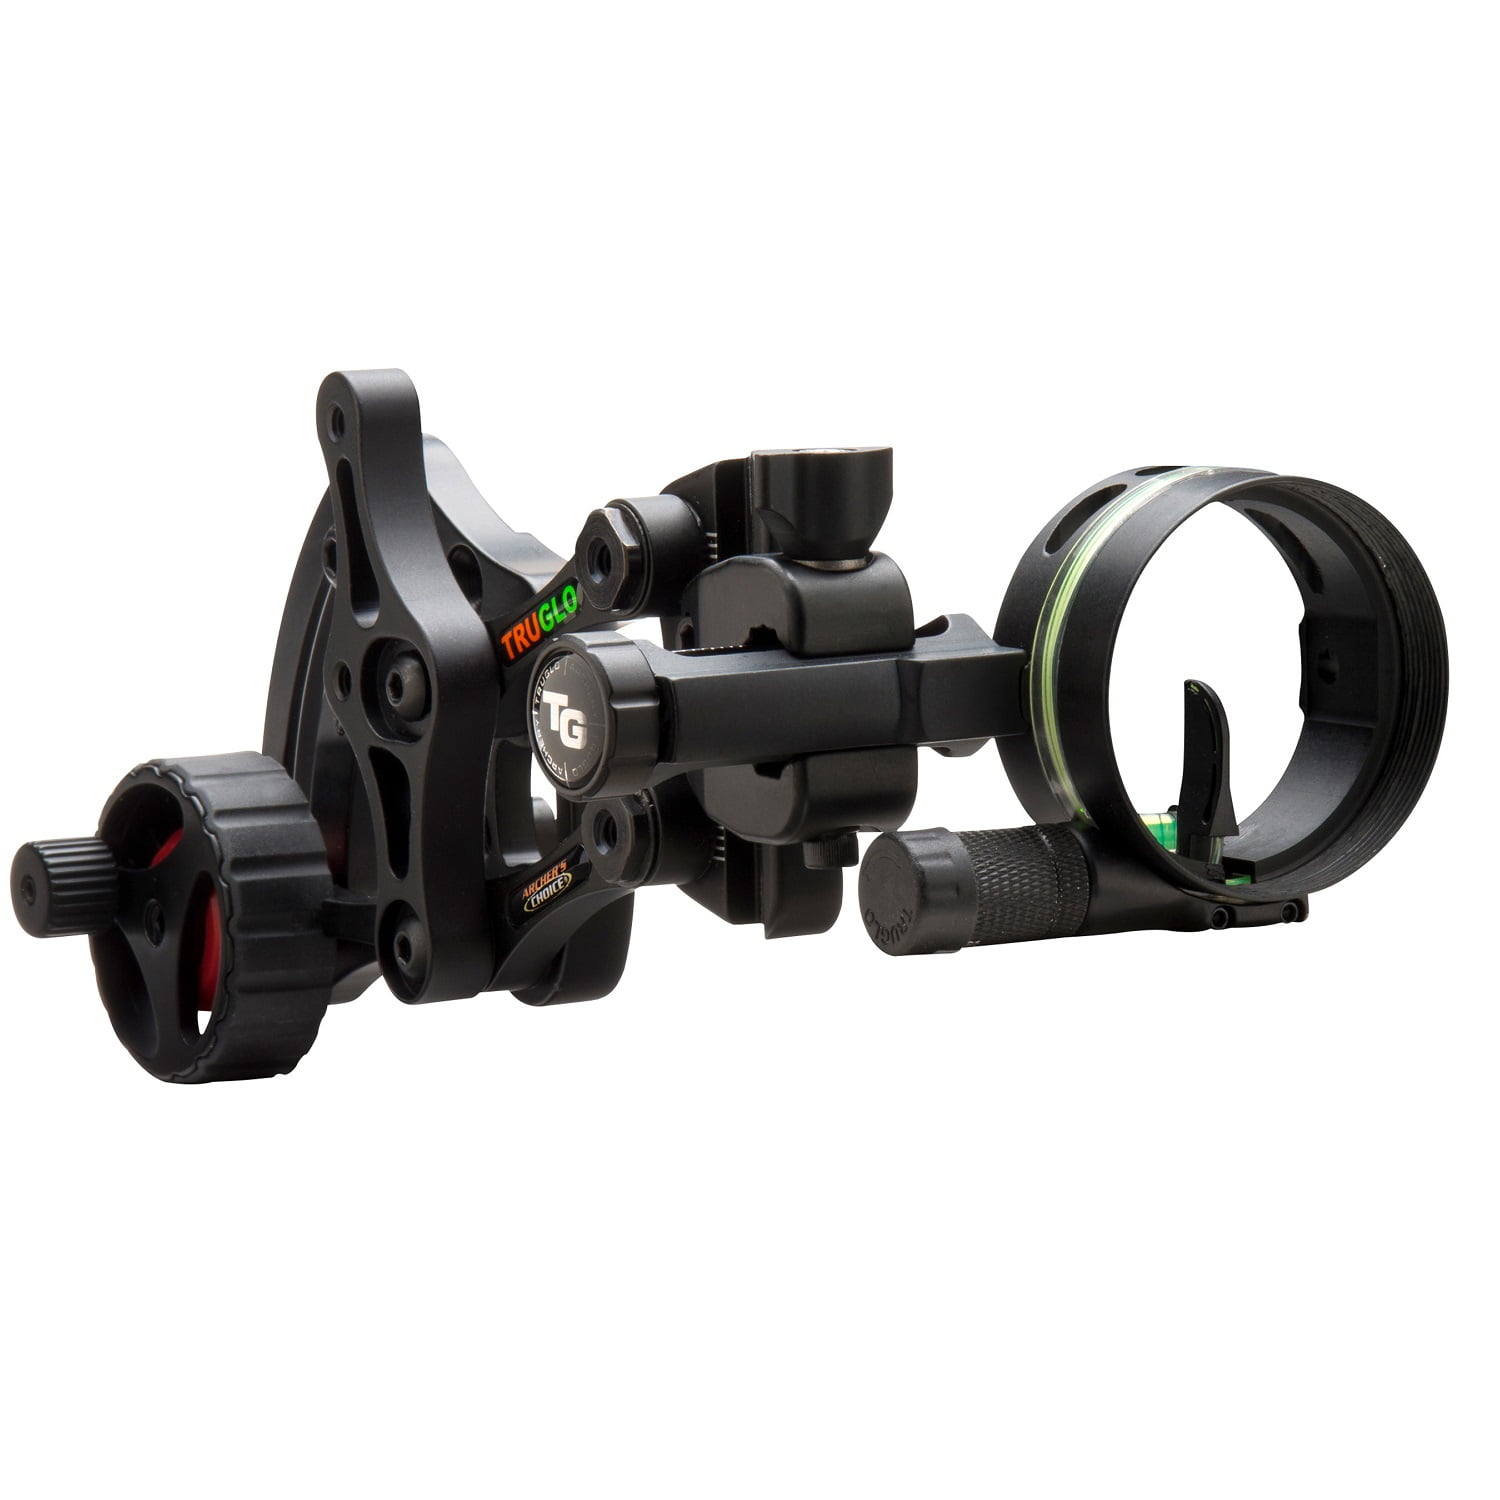 TruGlo ARCHER'S CHOICE RANGE ROVER PRO Archery Scope Lens Optix 300